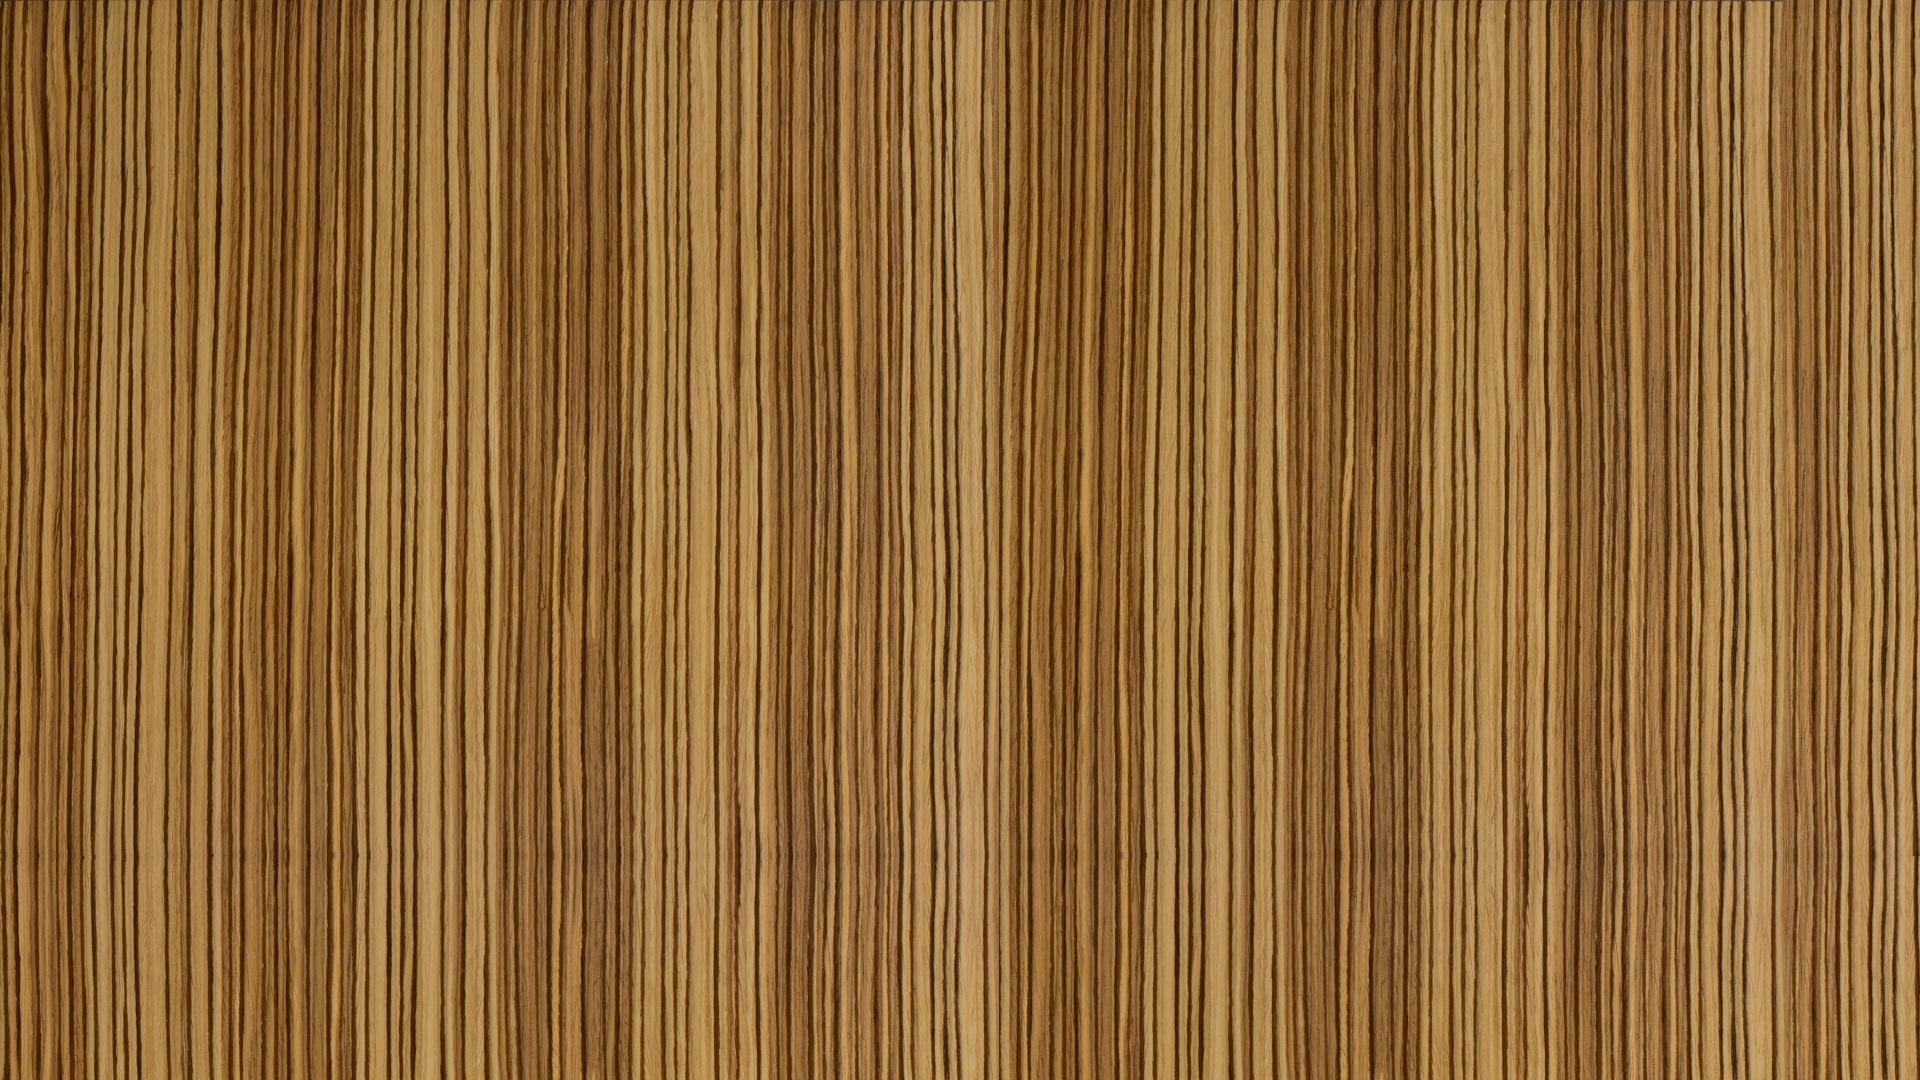 images of zebra wood